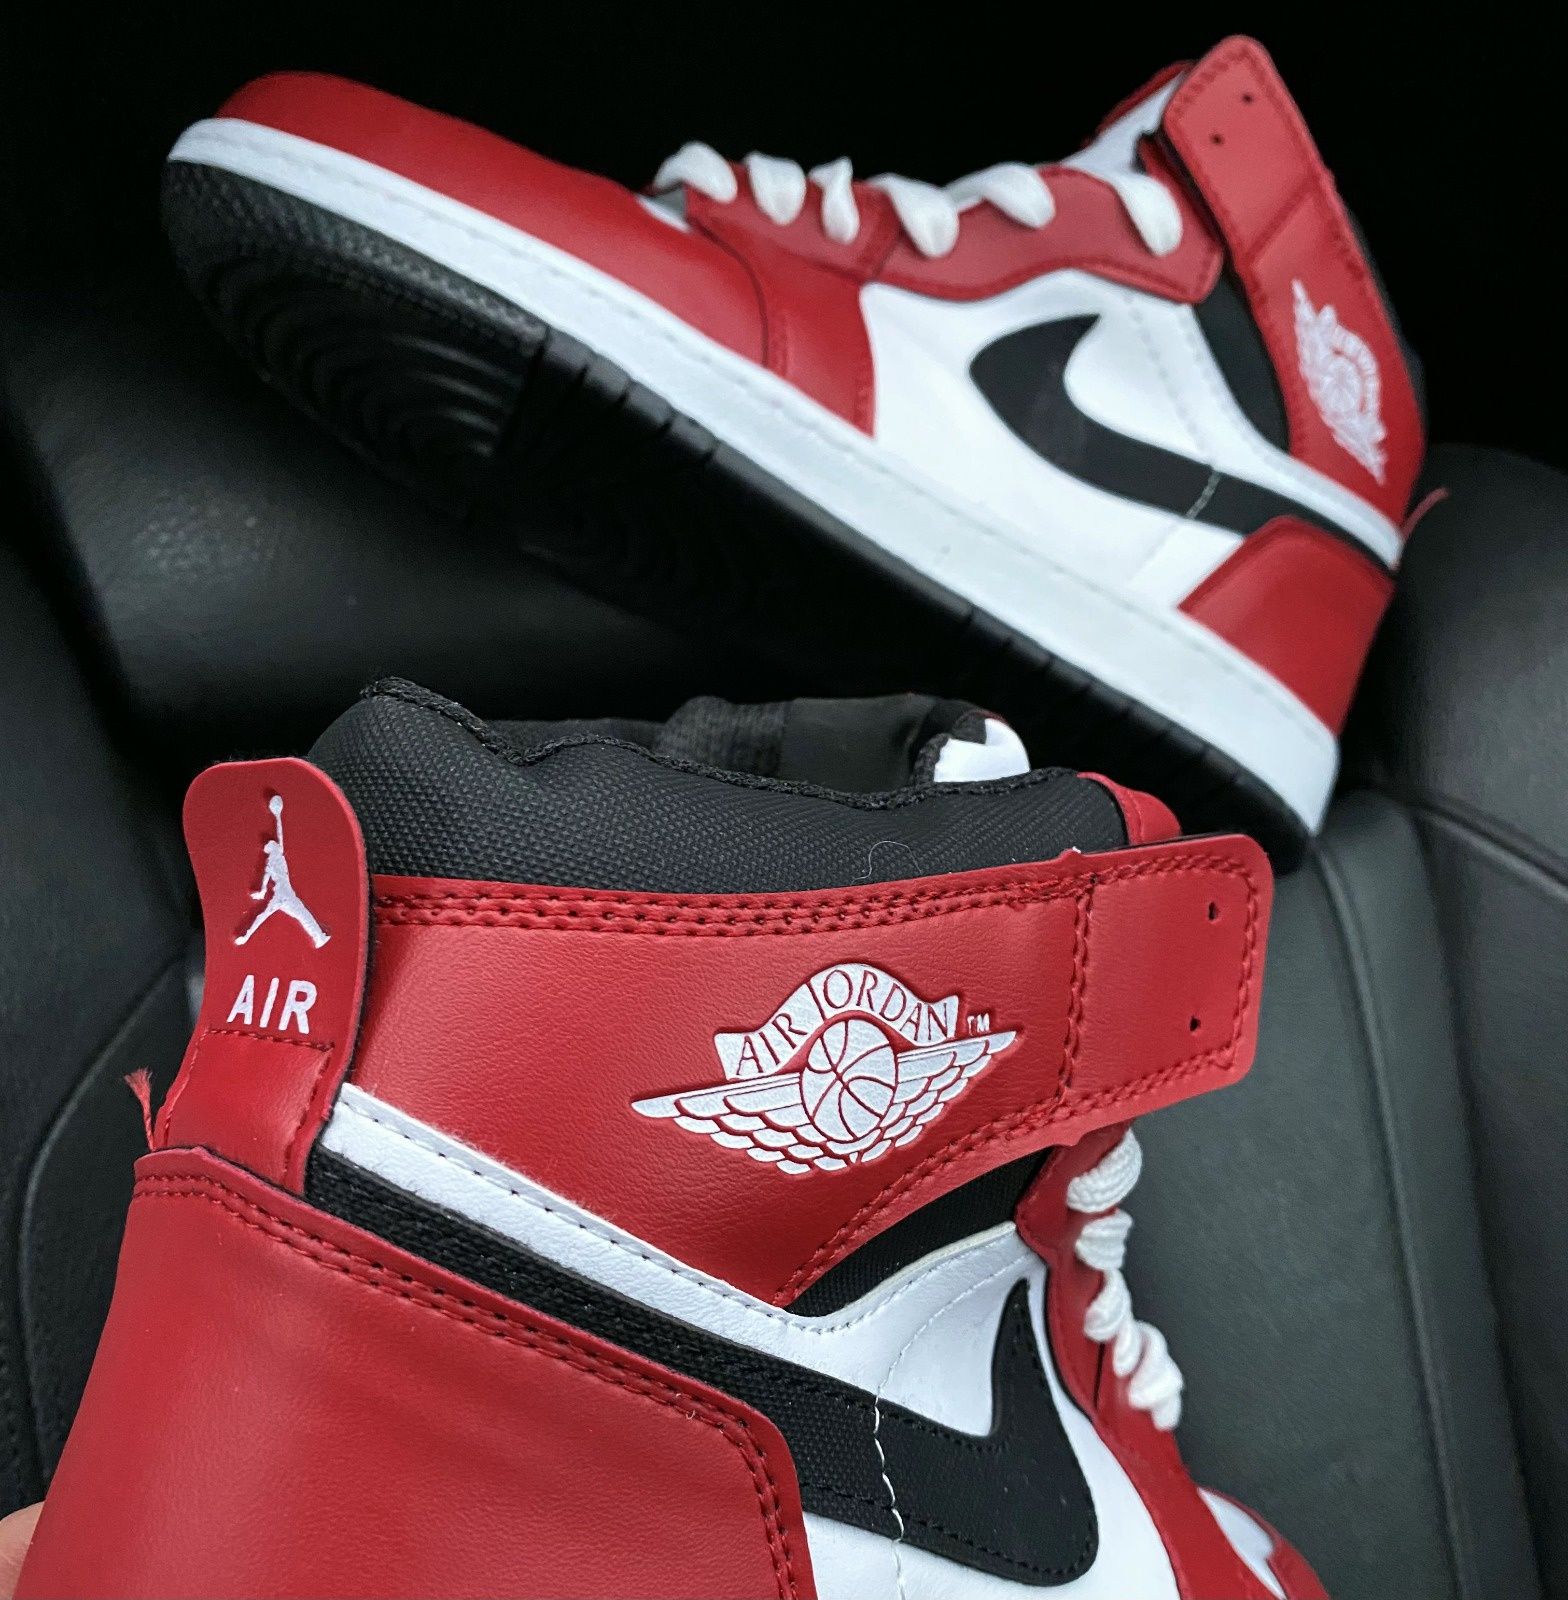 czerwone nike air jordan nowe buty 36-47 NOWE